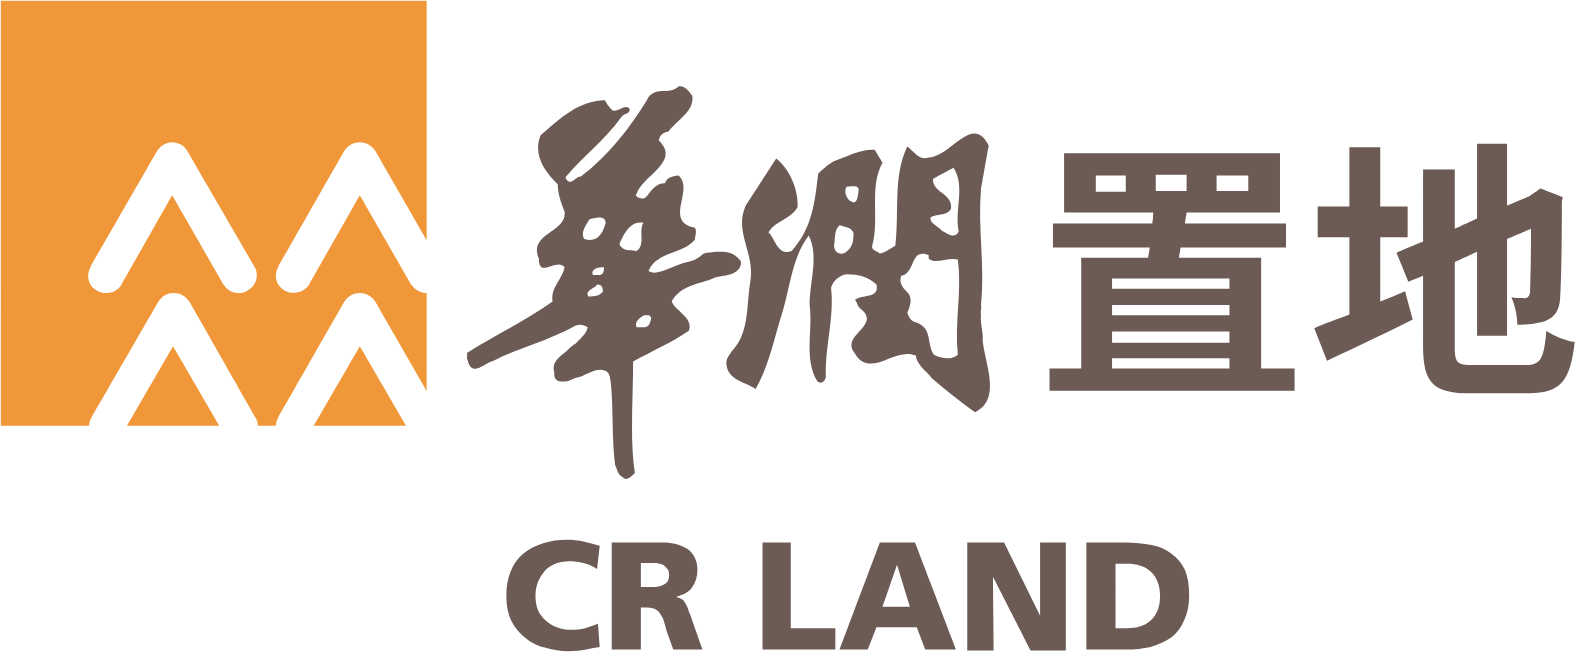 China Resources Land logo large (transparent PNG)